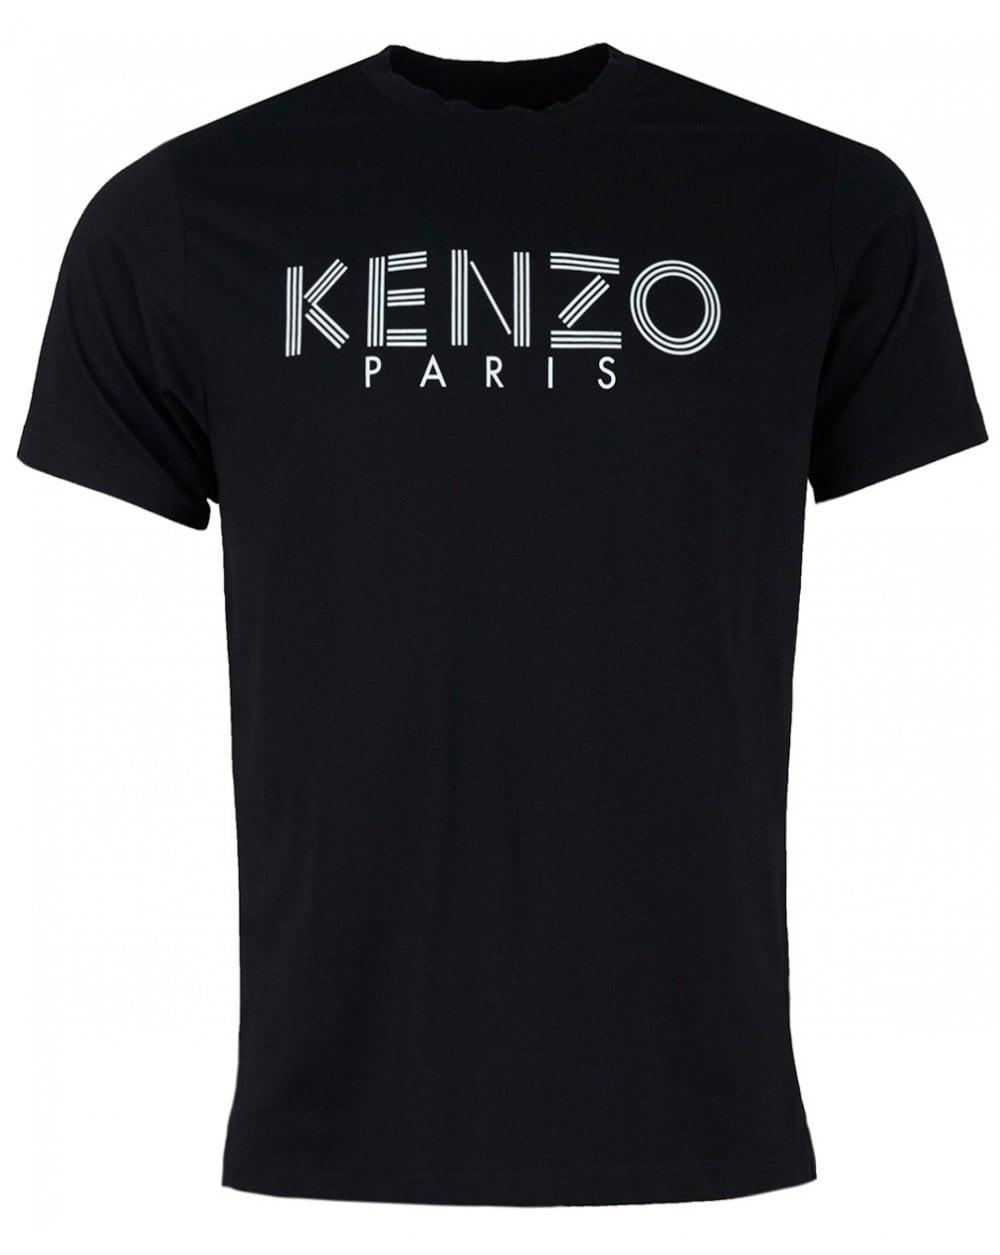 Kenzo Paris Logo - Kenzo Paris Logo Crew Neck T-shirt - Men from Psyche UK